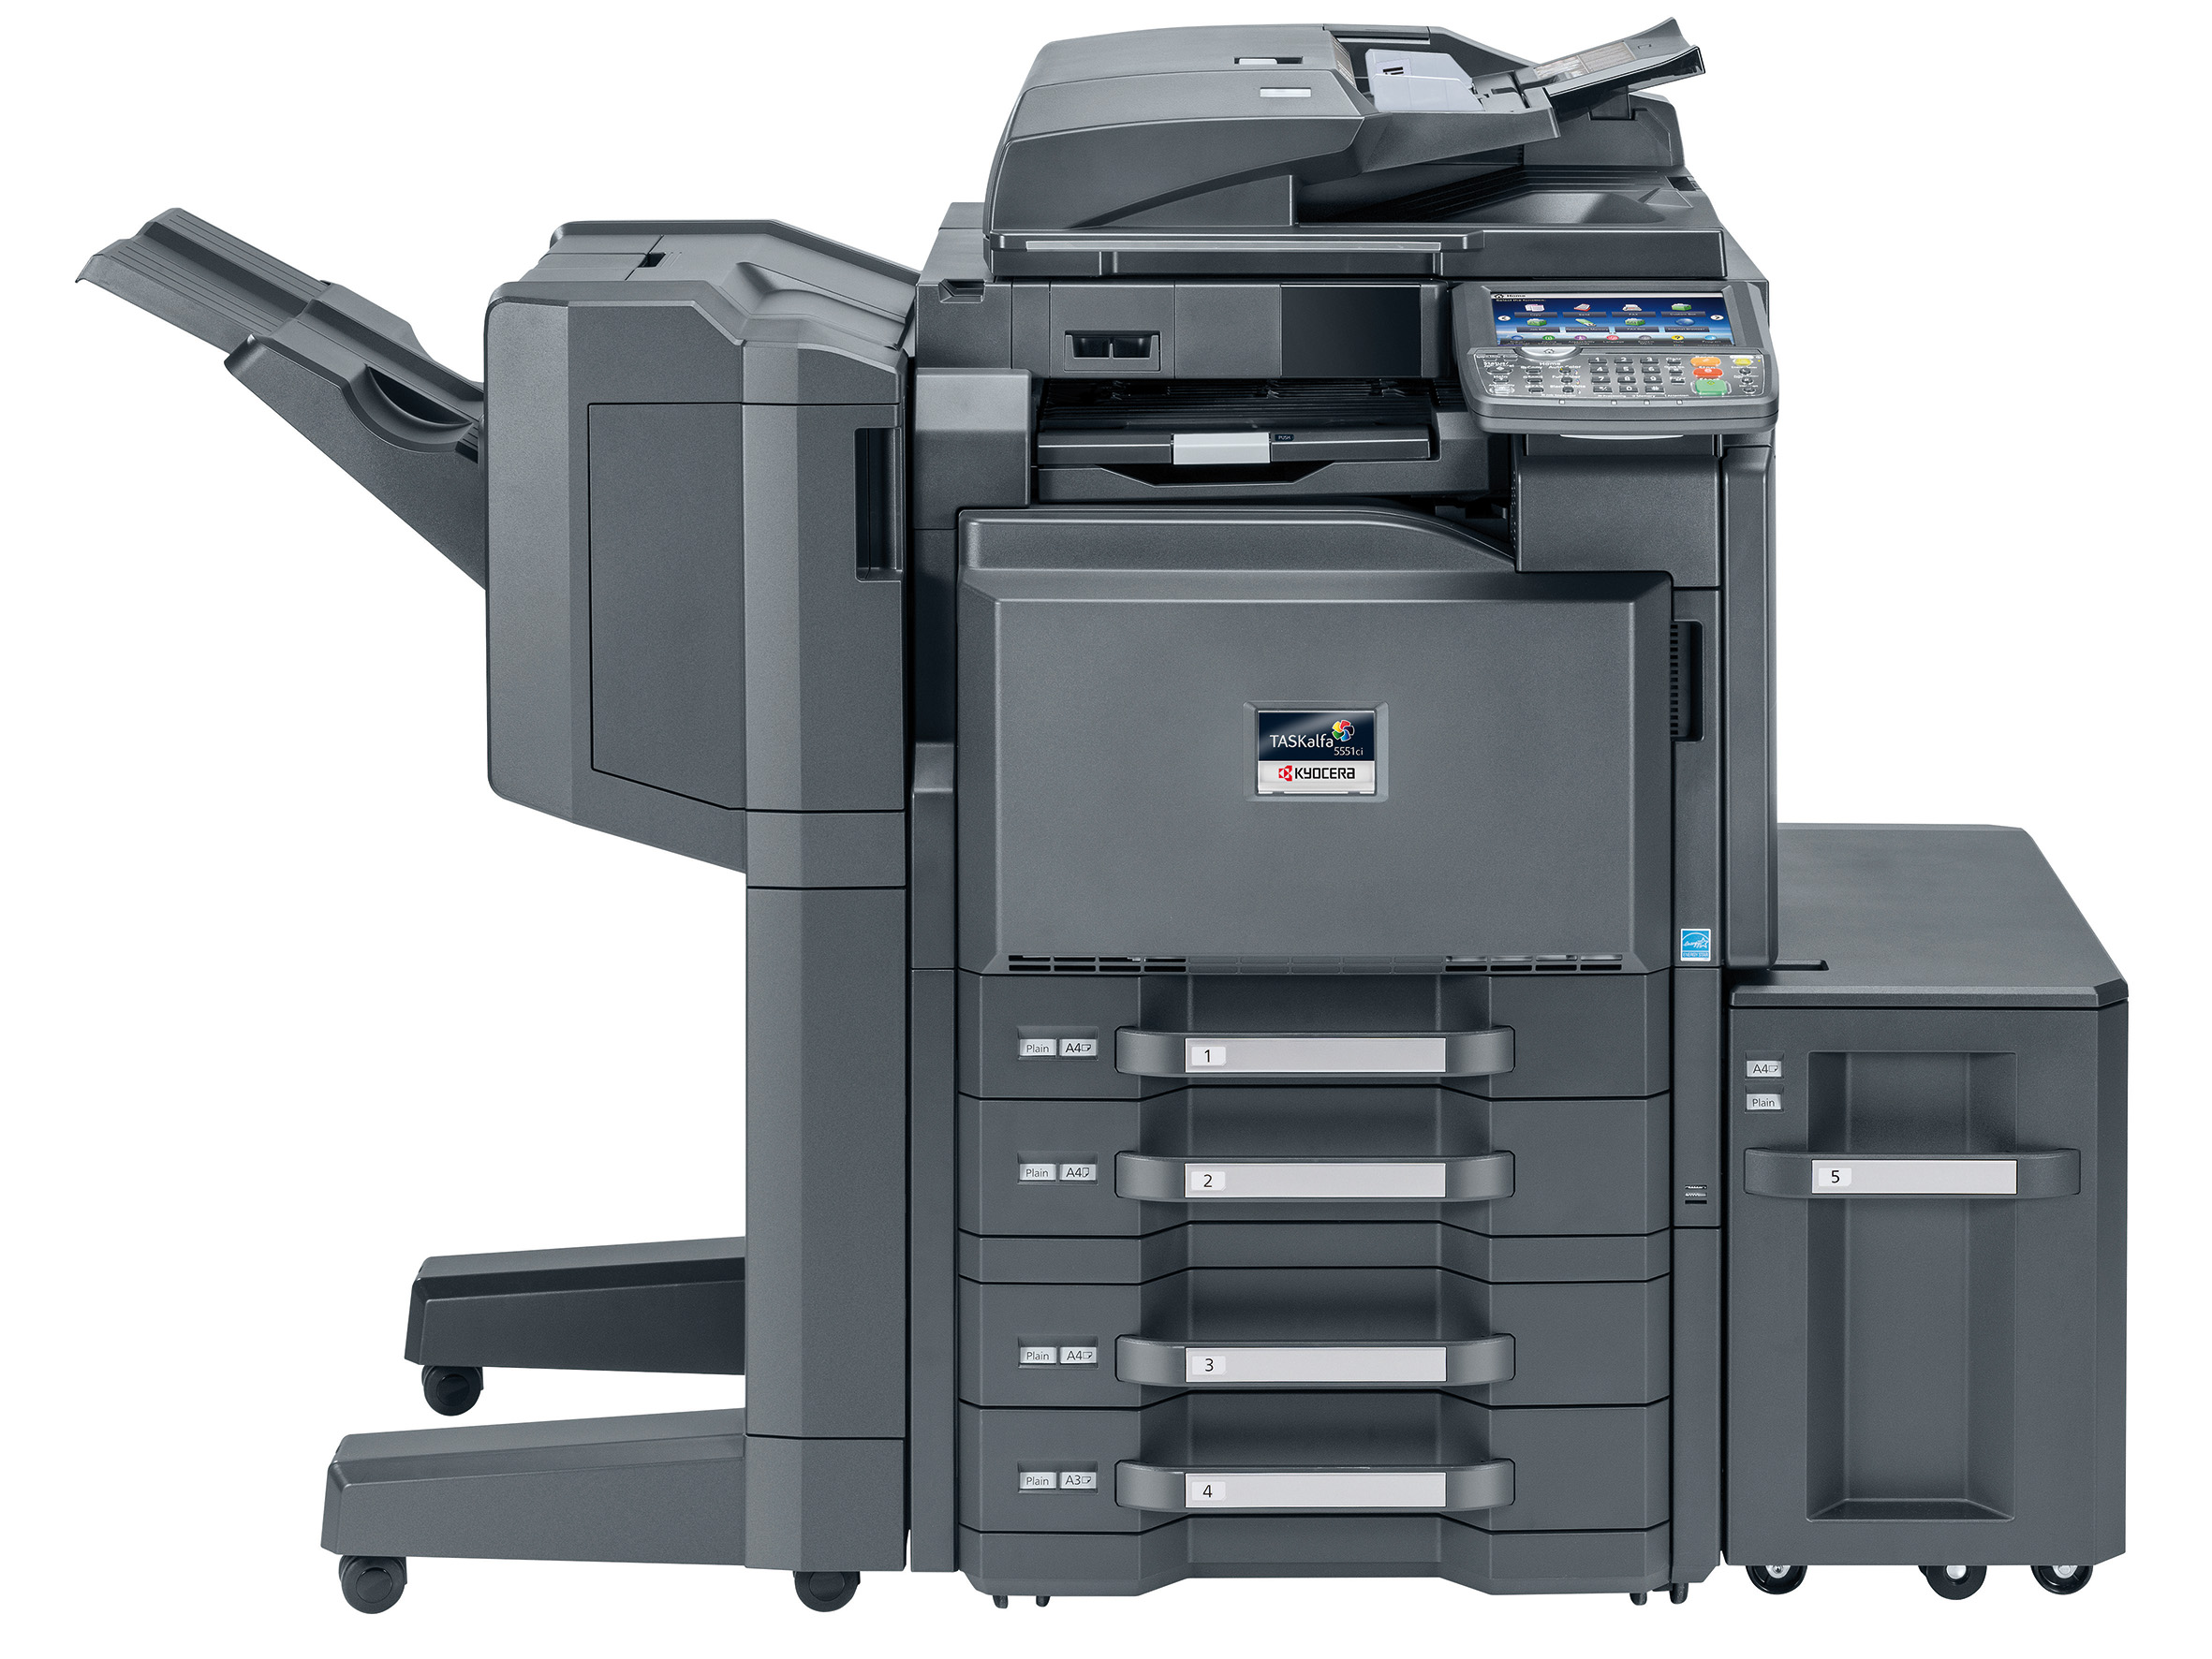 Leasing a Printer - Advanced Photocopy